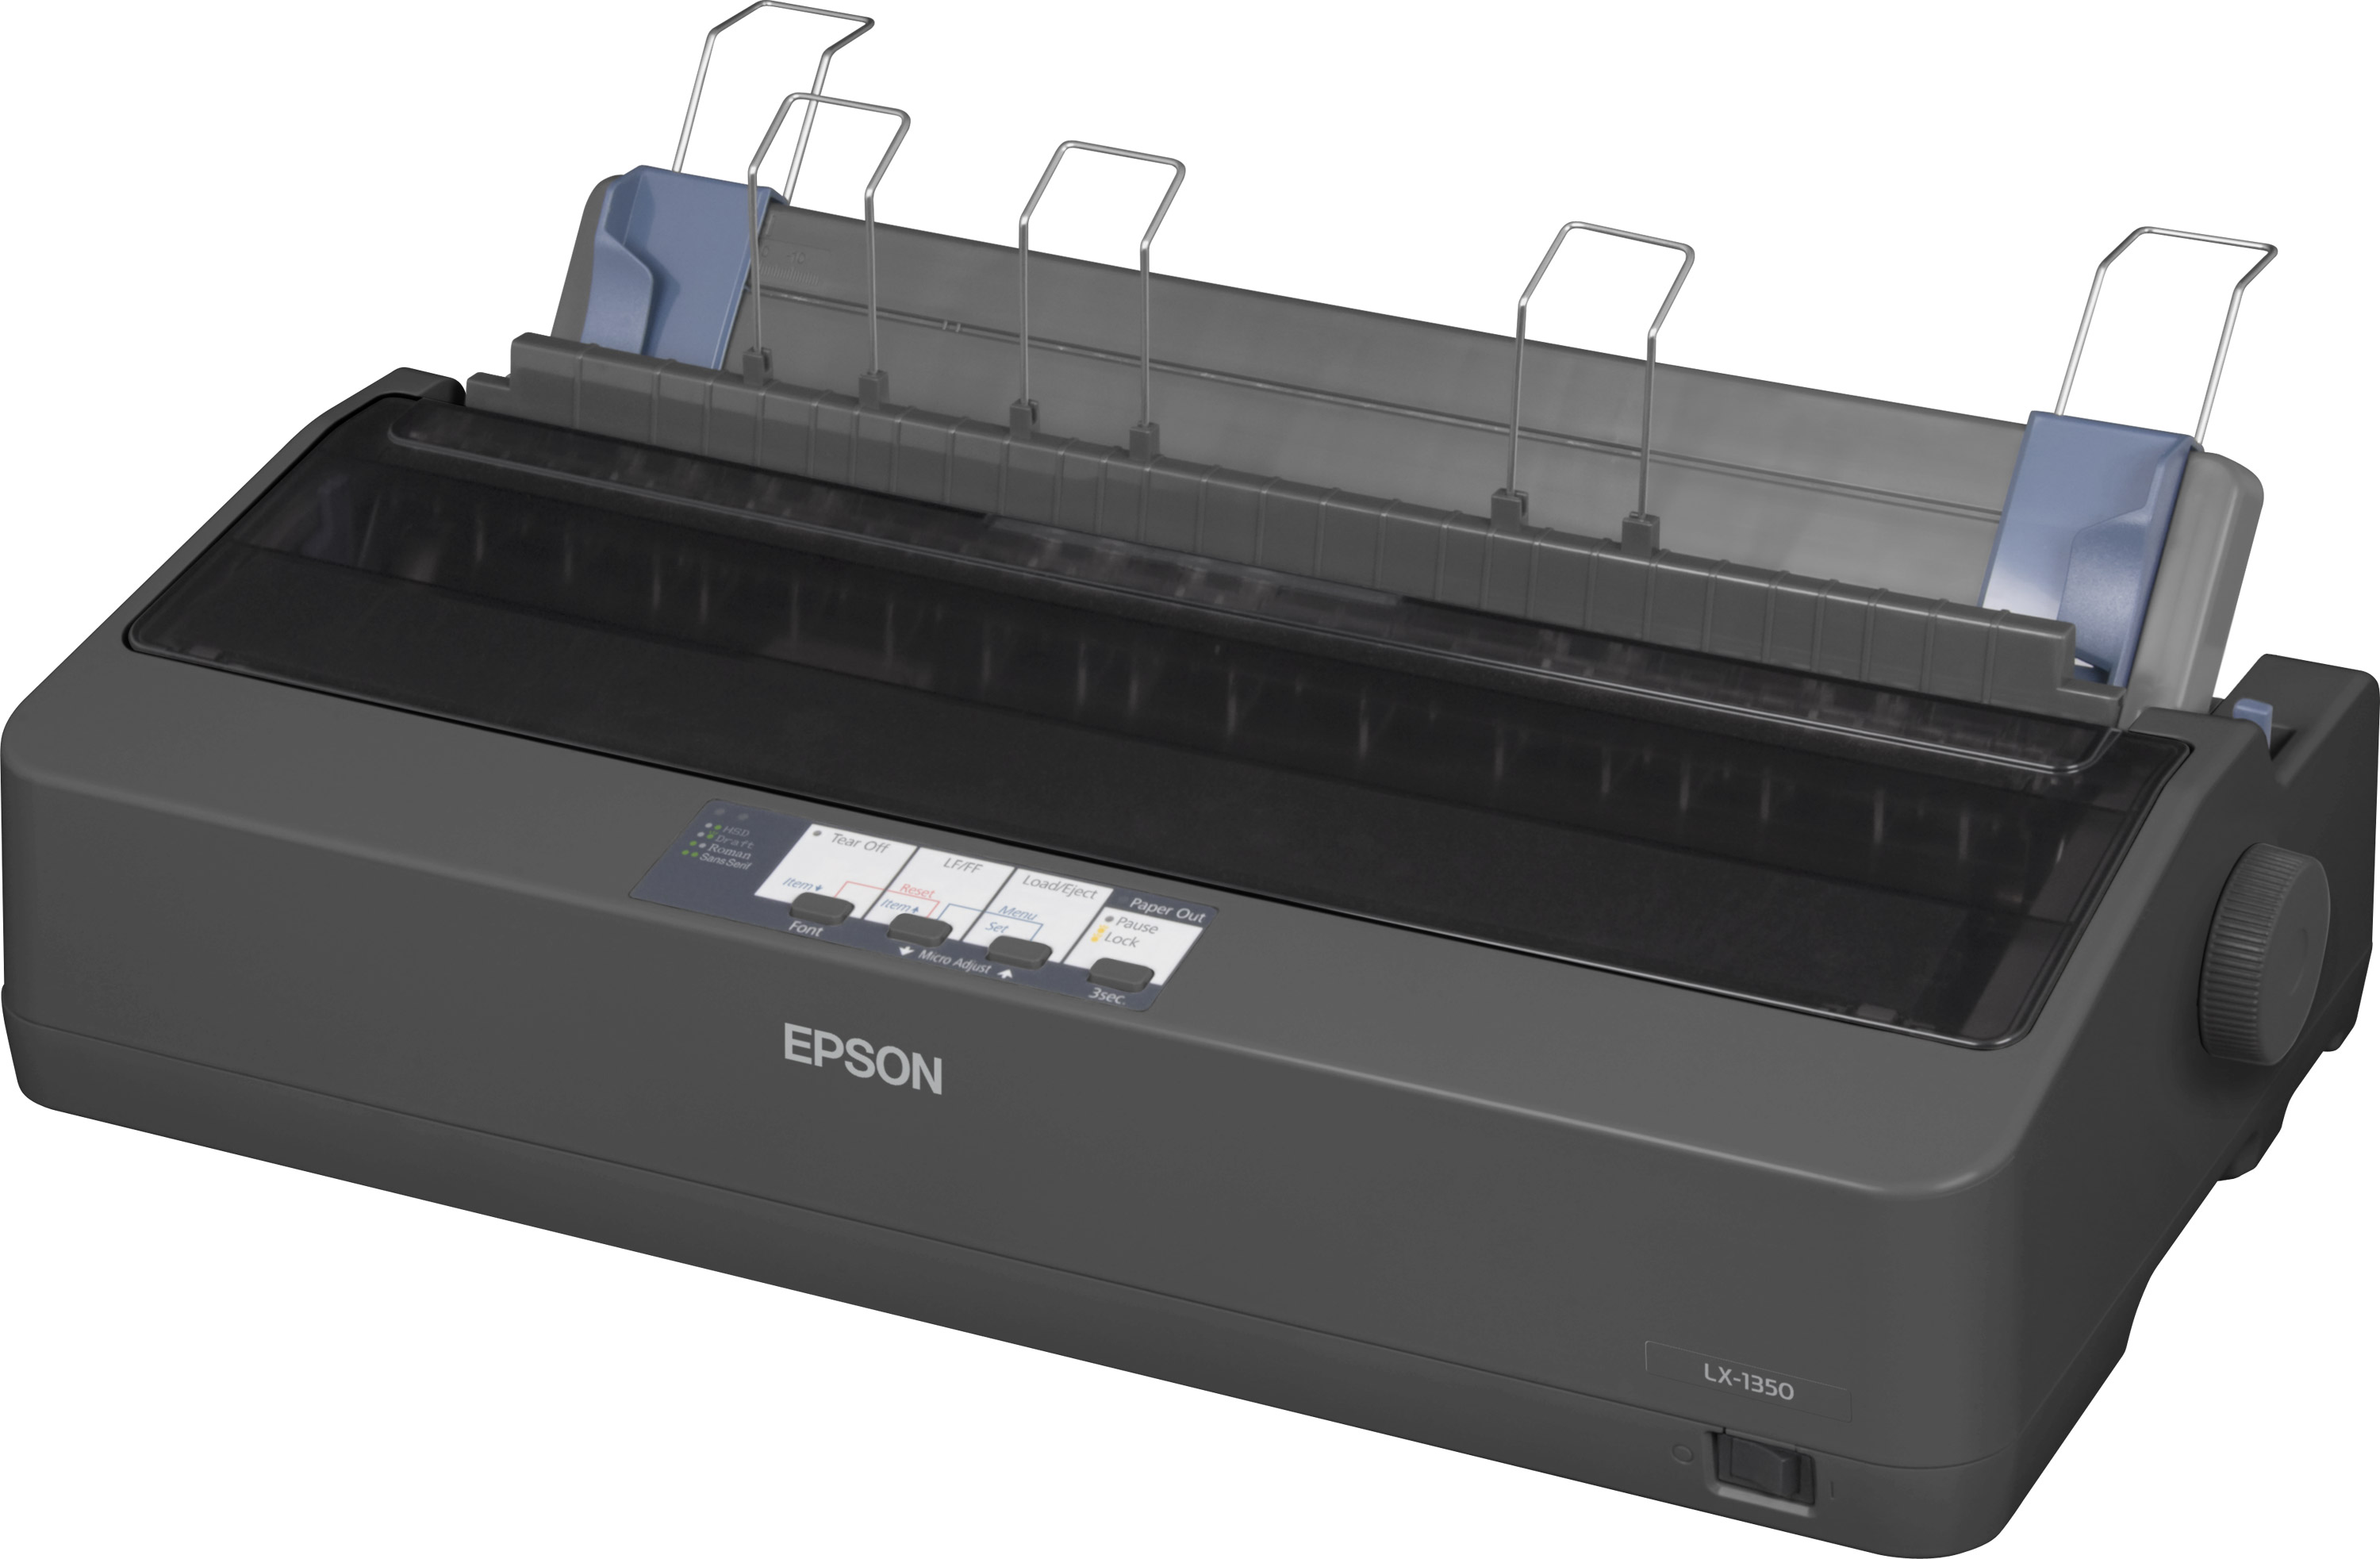 Матричный принтер epson lx. Принтер матричный Epson LX-1350. Принтер матричный Epson LX-350. Принтер матричный Epson LX-300. Epson LX-1350 c11cd24301.